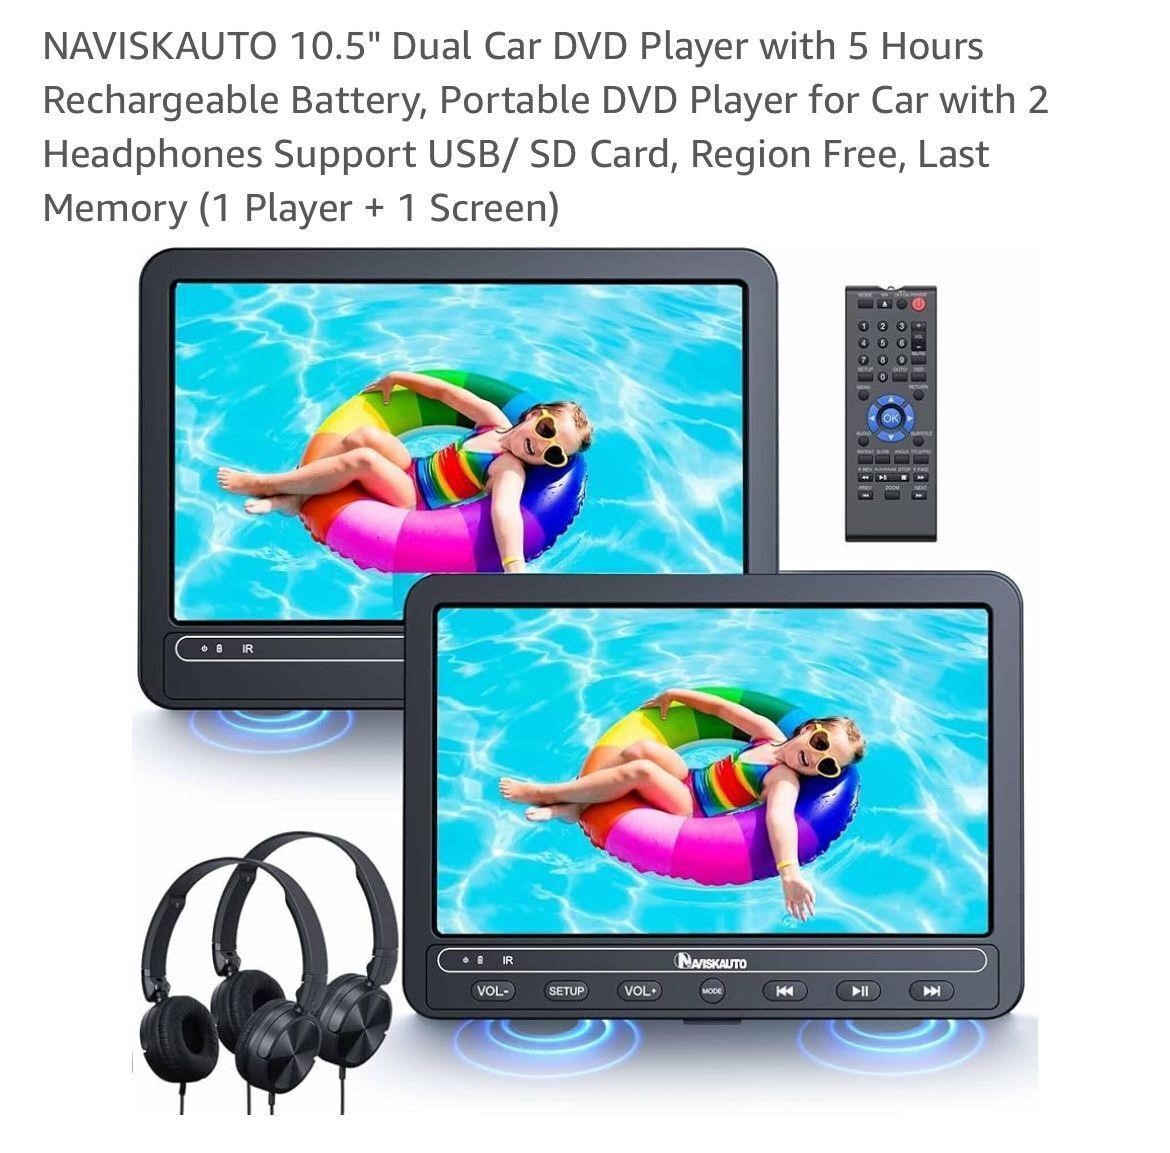 NAVISKAUTO 10.5" Dual Car DVD Player